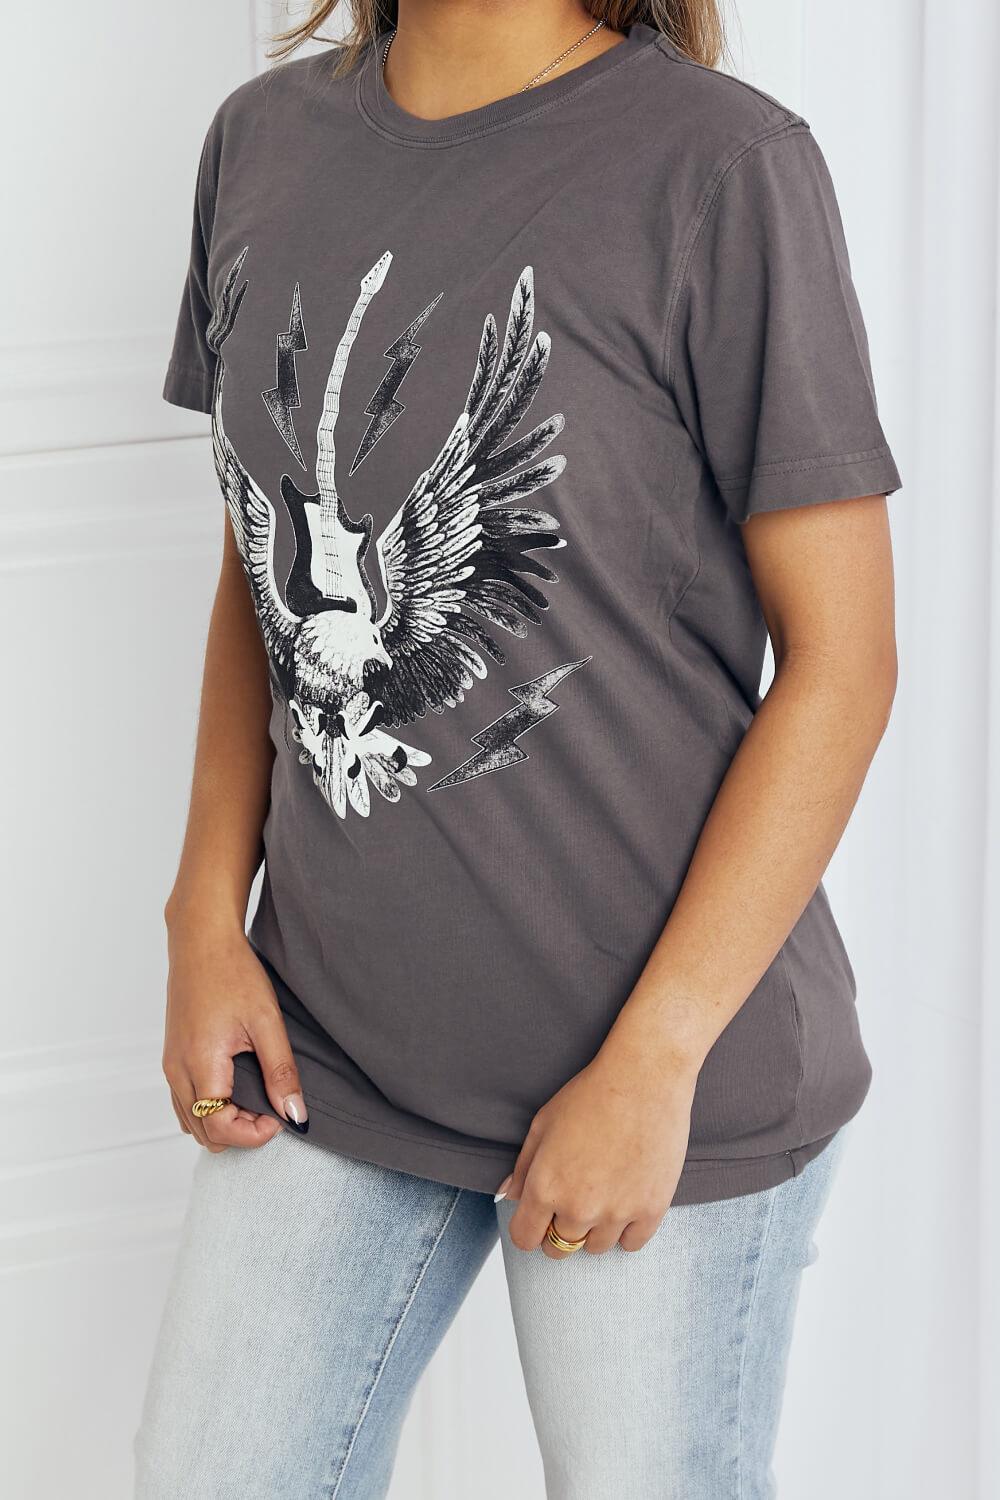 mineB Full Size Eagle Graphic Tee Shirt - Glamorous Boutique USA L.L.C.